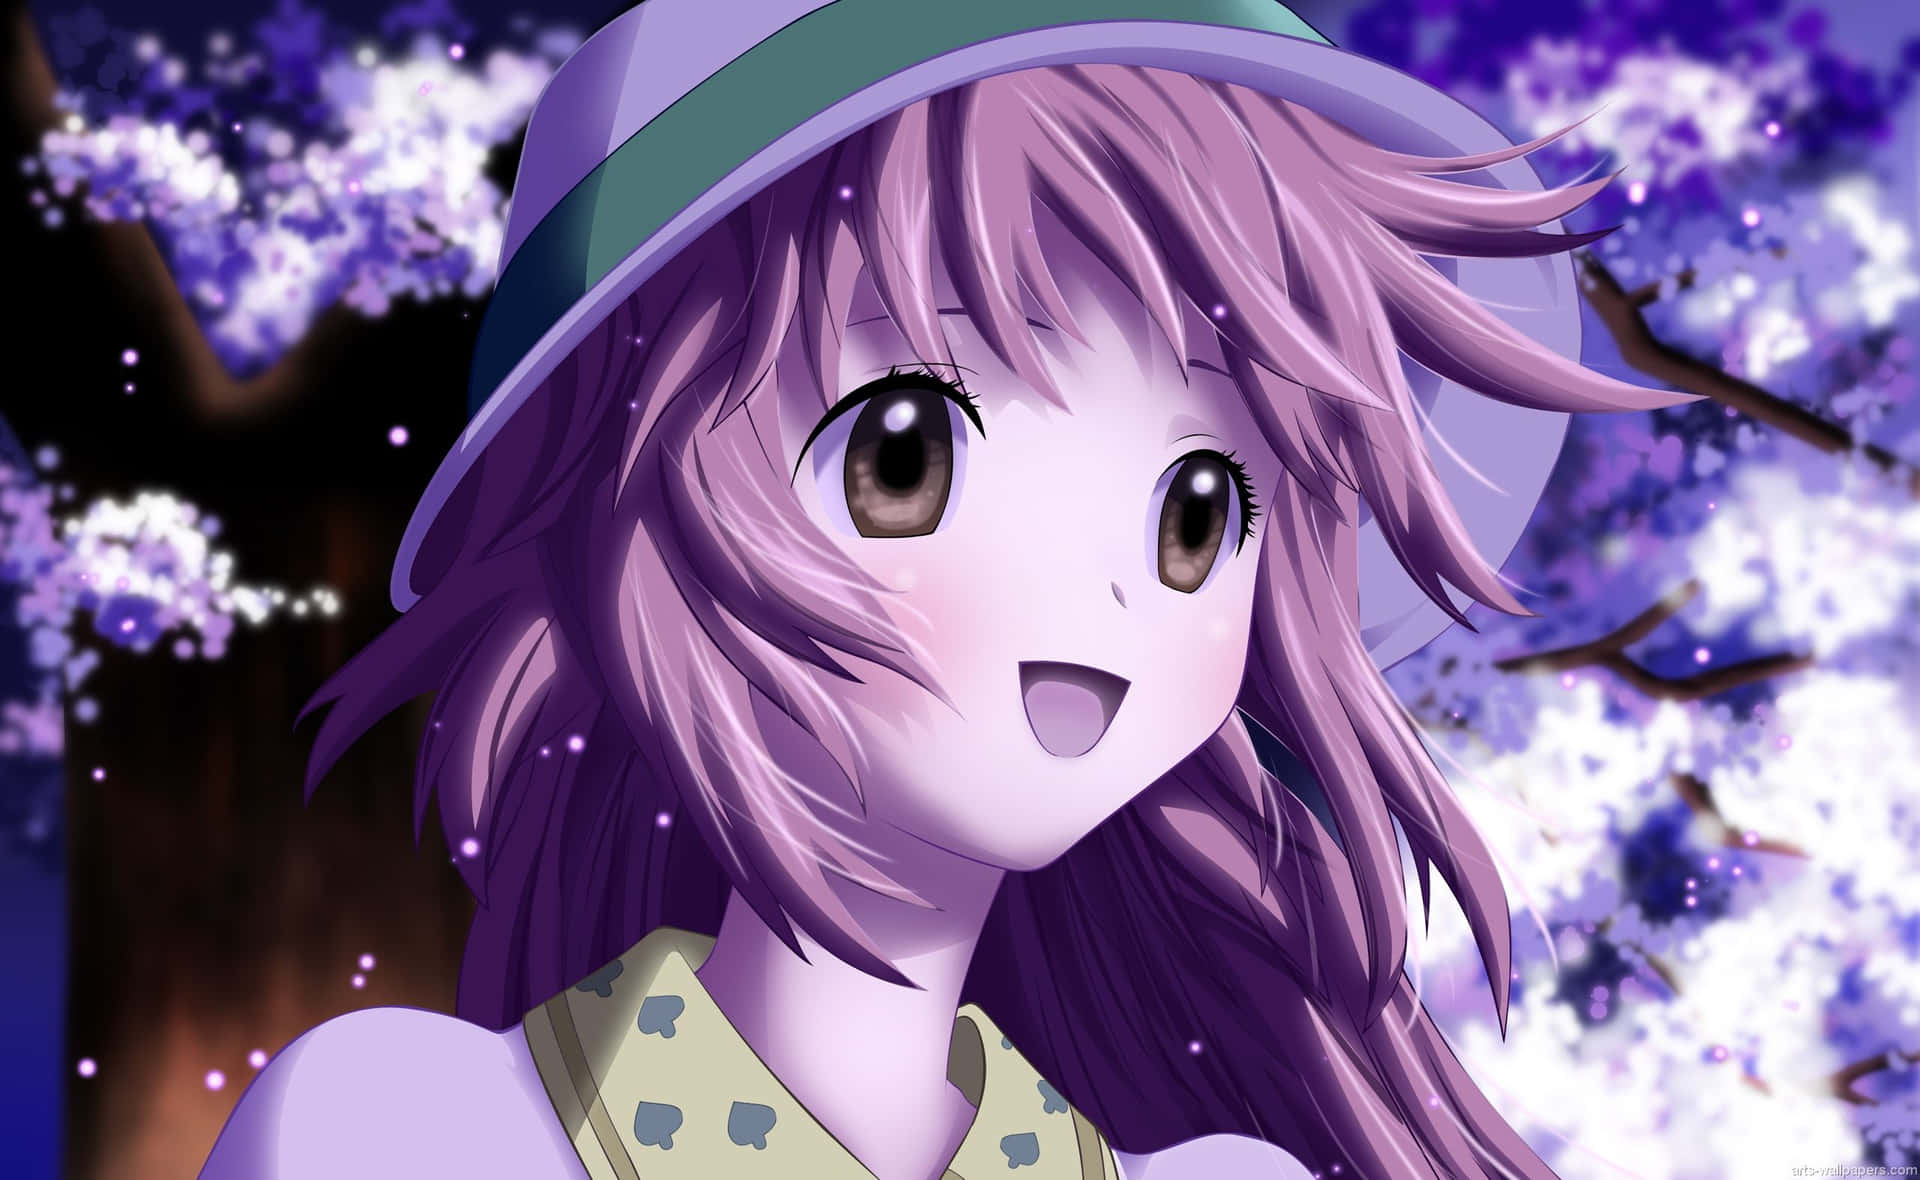 Smiling Kobato With Lavender Anime Cartoon Background